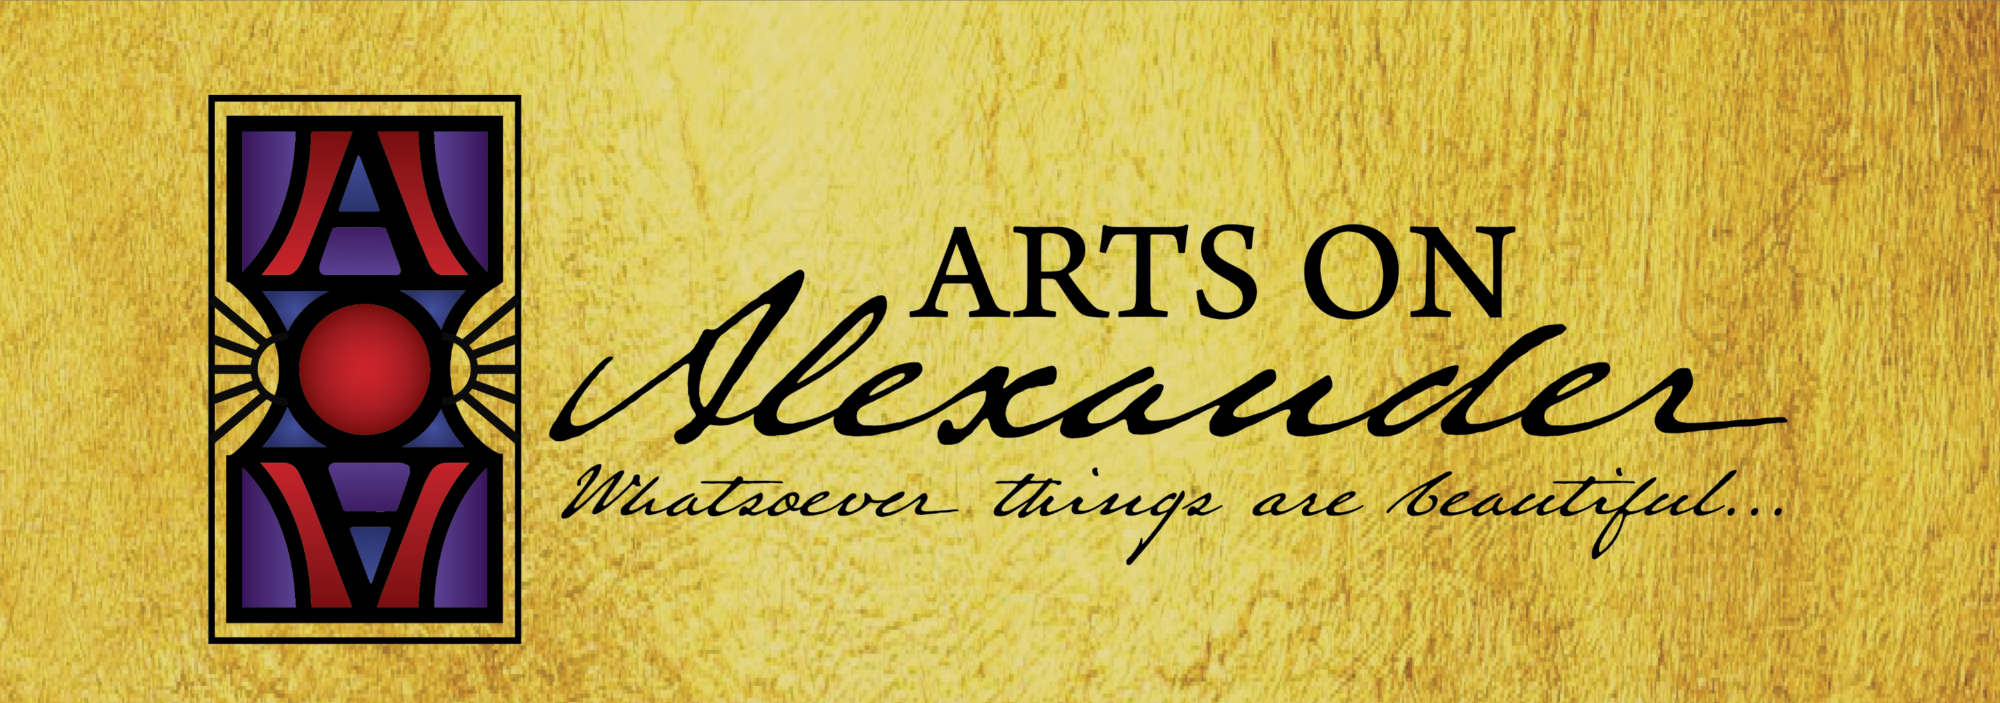 Arts on Alexander